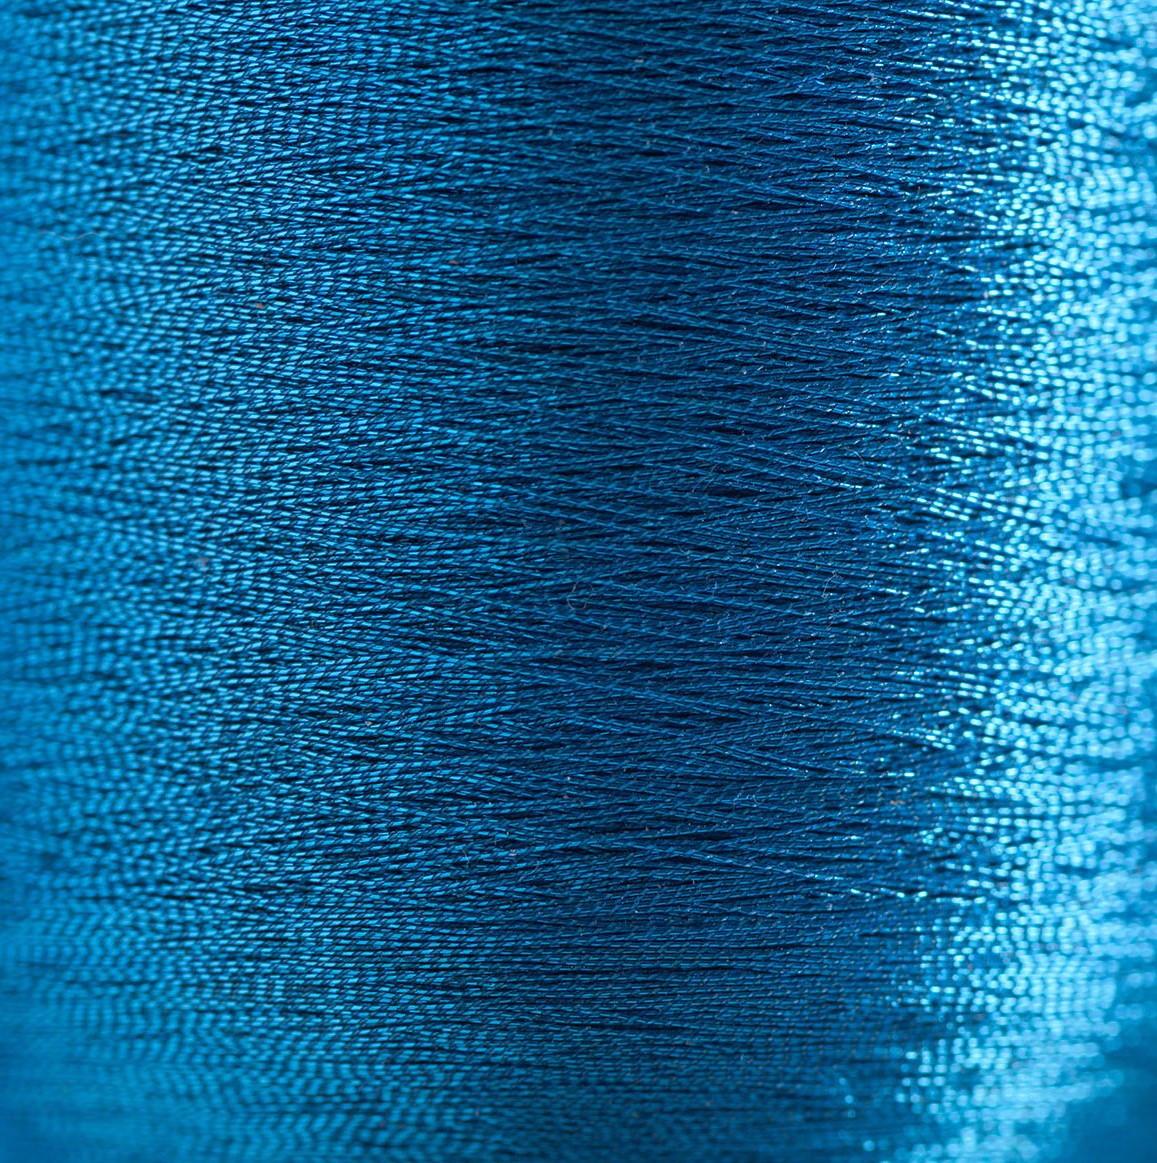 Turquoise Beaded Micro-Crochet